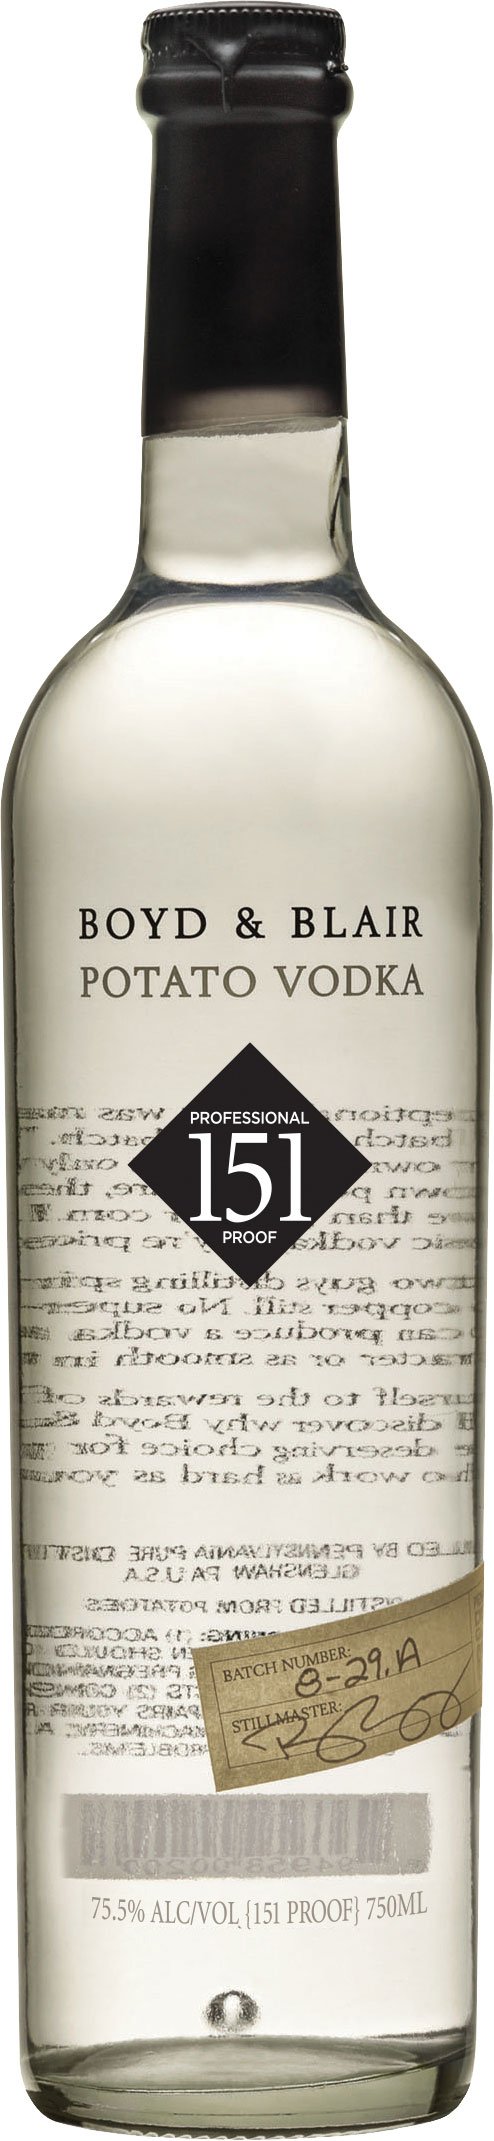 Boyd and Blair Professional Proof 151 Potato Vodka